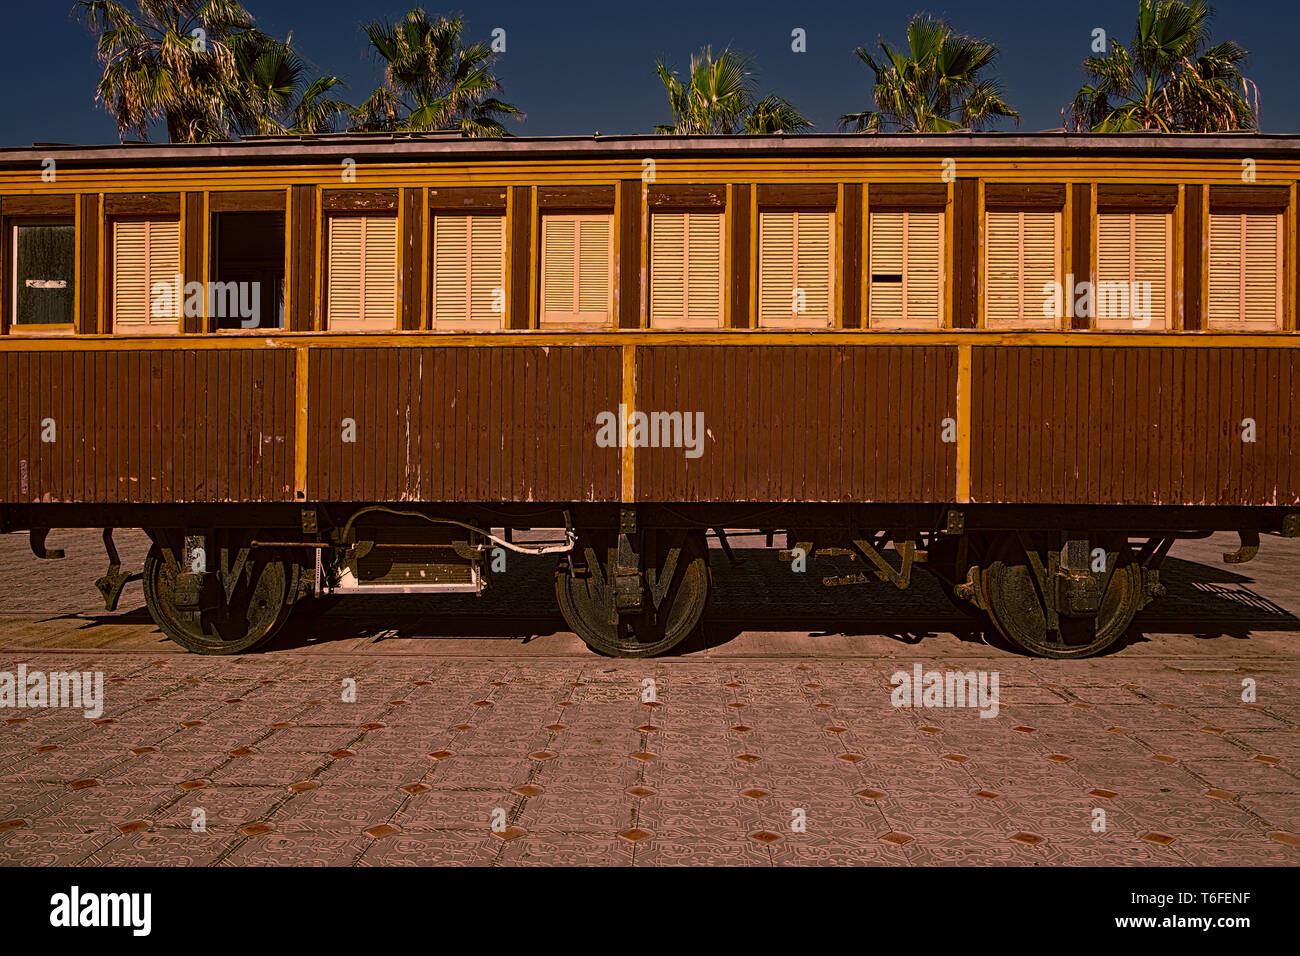 Retro Railway Carriage in Israel Stock Photo